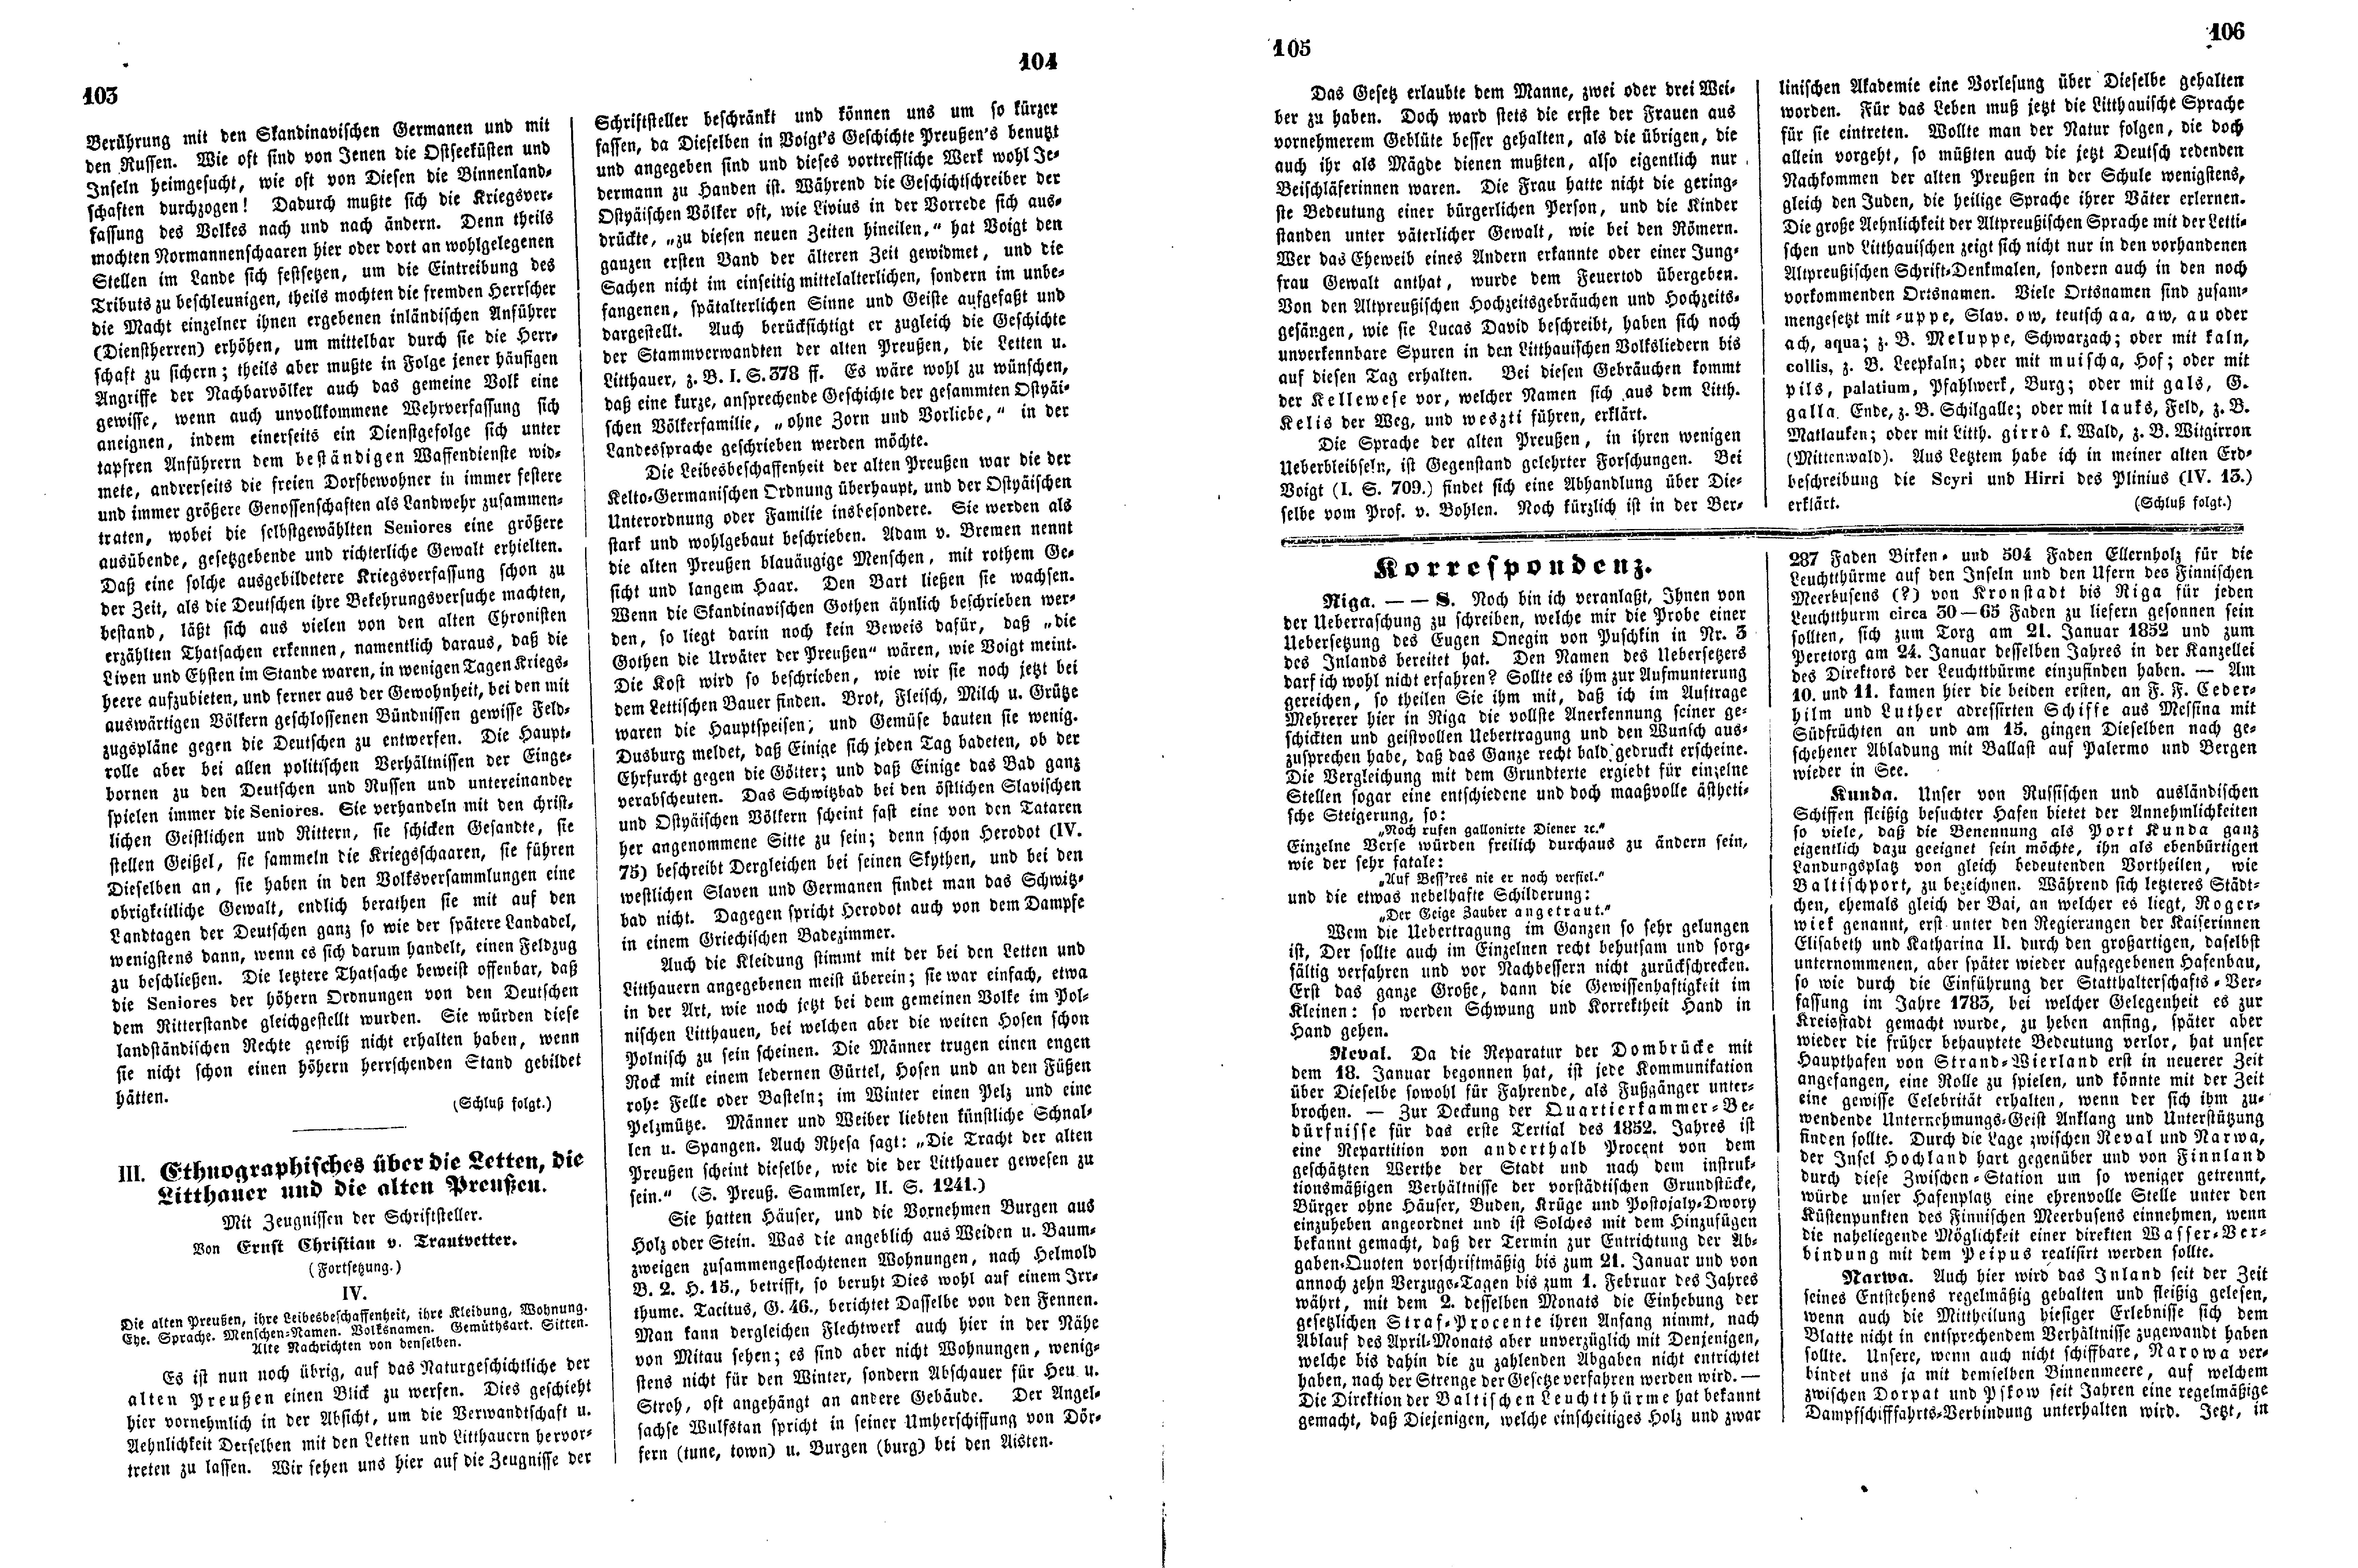 Das Inland [17] (1852) | 30. (103-106) Main body of text